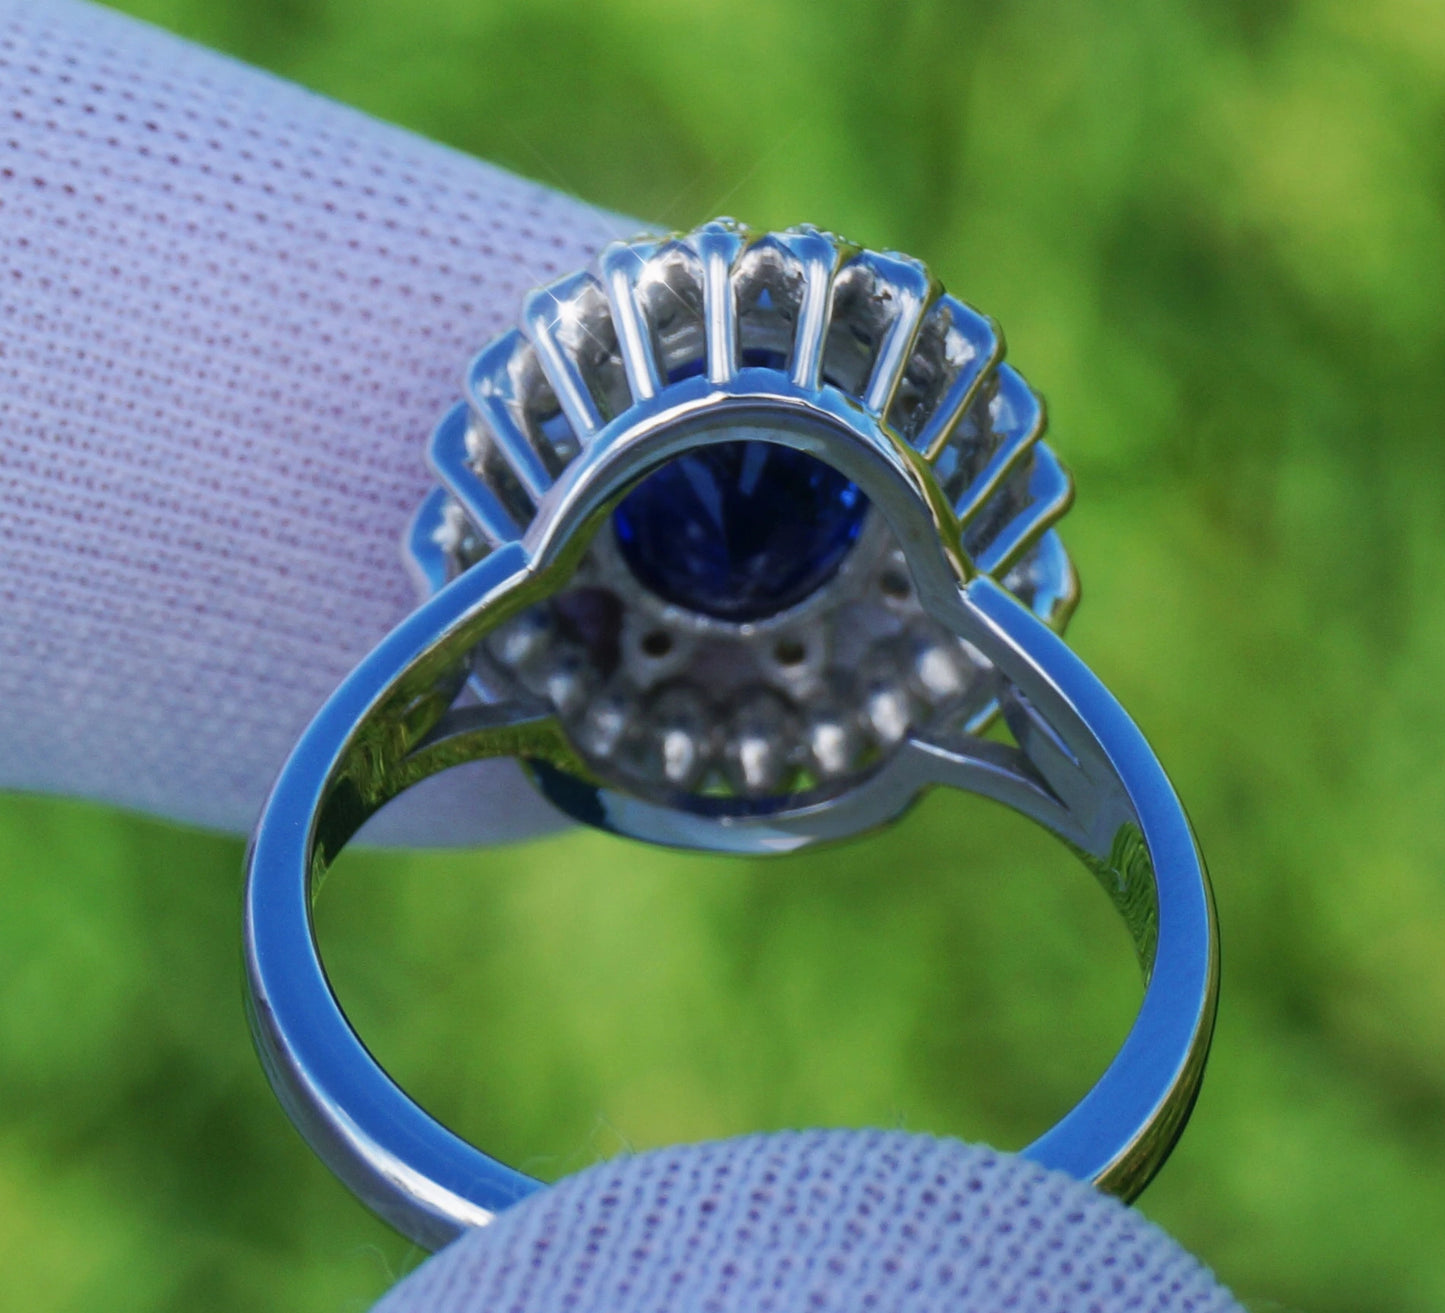 Sapphire gold 14k ring diamond ceylon sri-lanka oval blue 3.82ctw gia certified